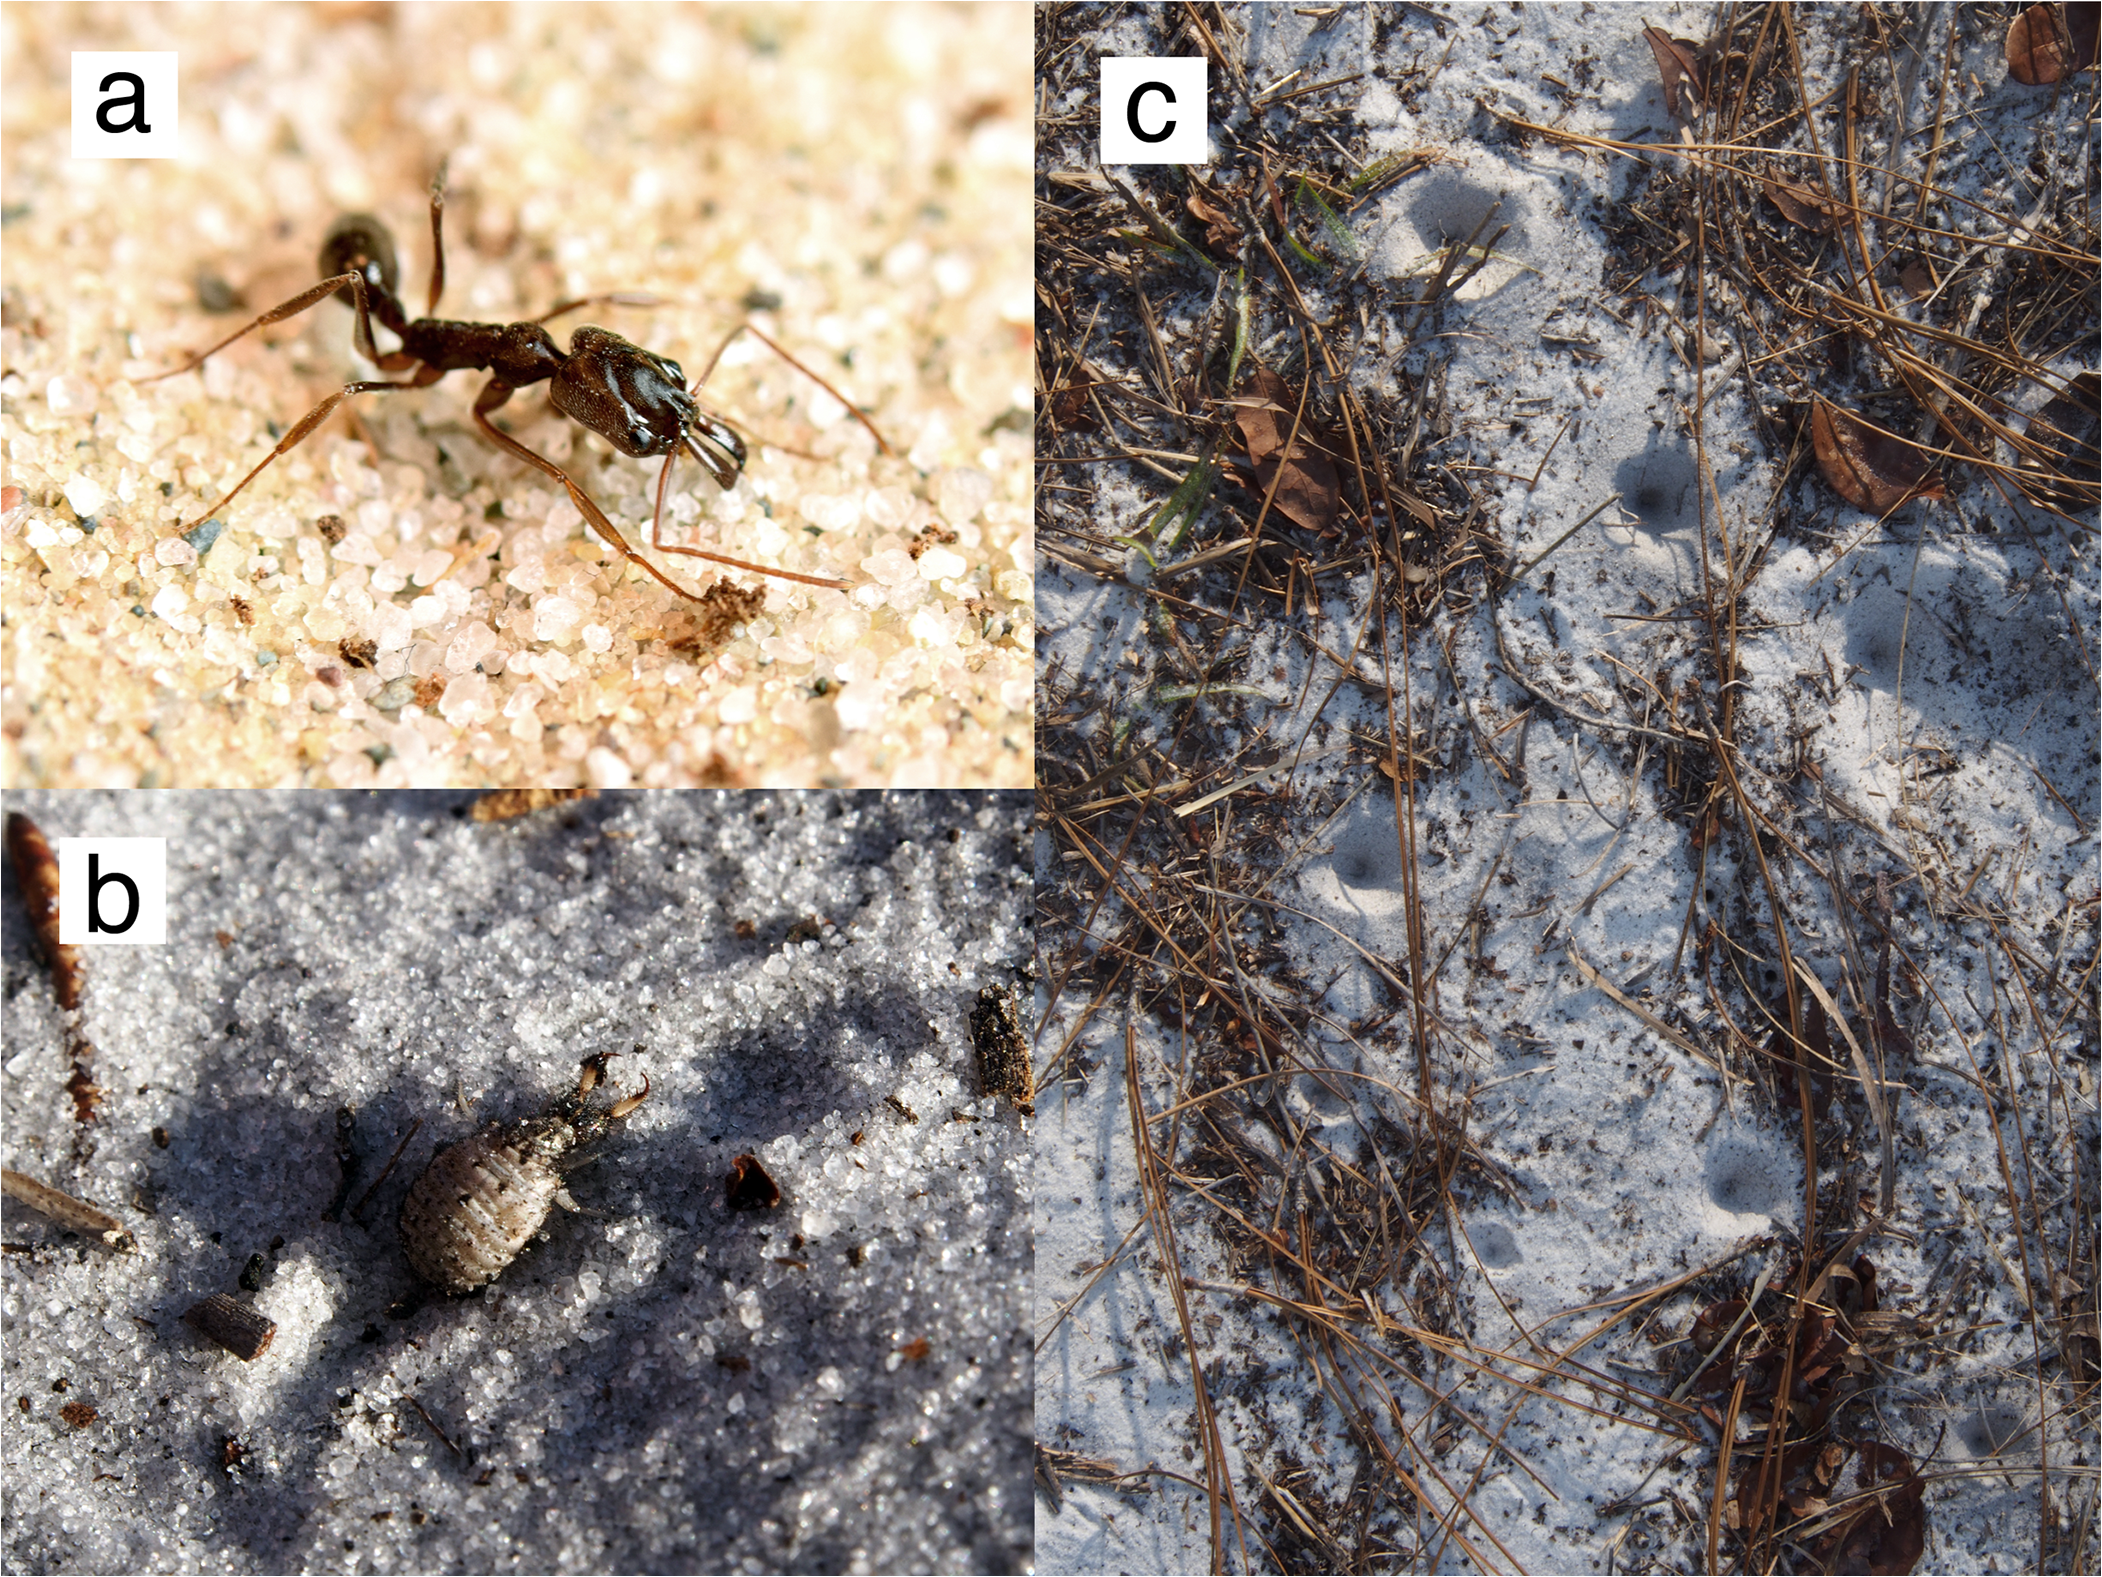 Vlevo nahoře dělnice mravence Odontomachus brunneus (a), pod ní larva mravkolva Myrmeleon (b) a vpravo její pasti na mravence (c) v písku (obr. Larabee FJ, Suarez AV (2015) Mandible-Powered Escape Jumps in Trap-Jaw Ants Increase Survival Rates during Predator-Prey Encounters. PLoS ONE 10(5): e0124871. doi:10.1371/journal.pone.0124871).